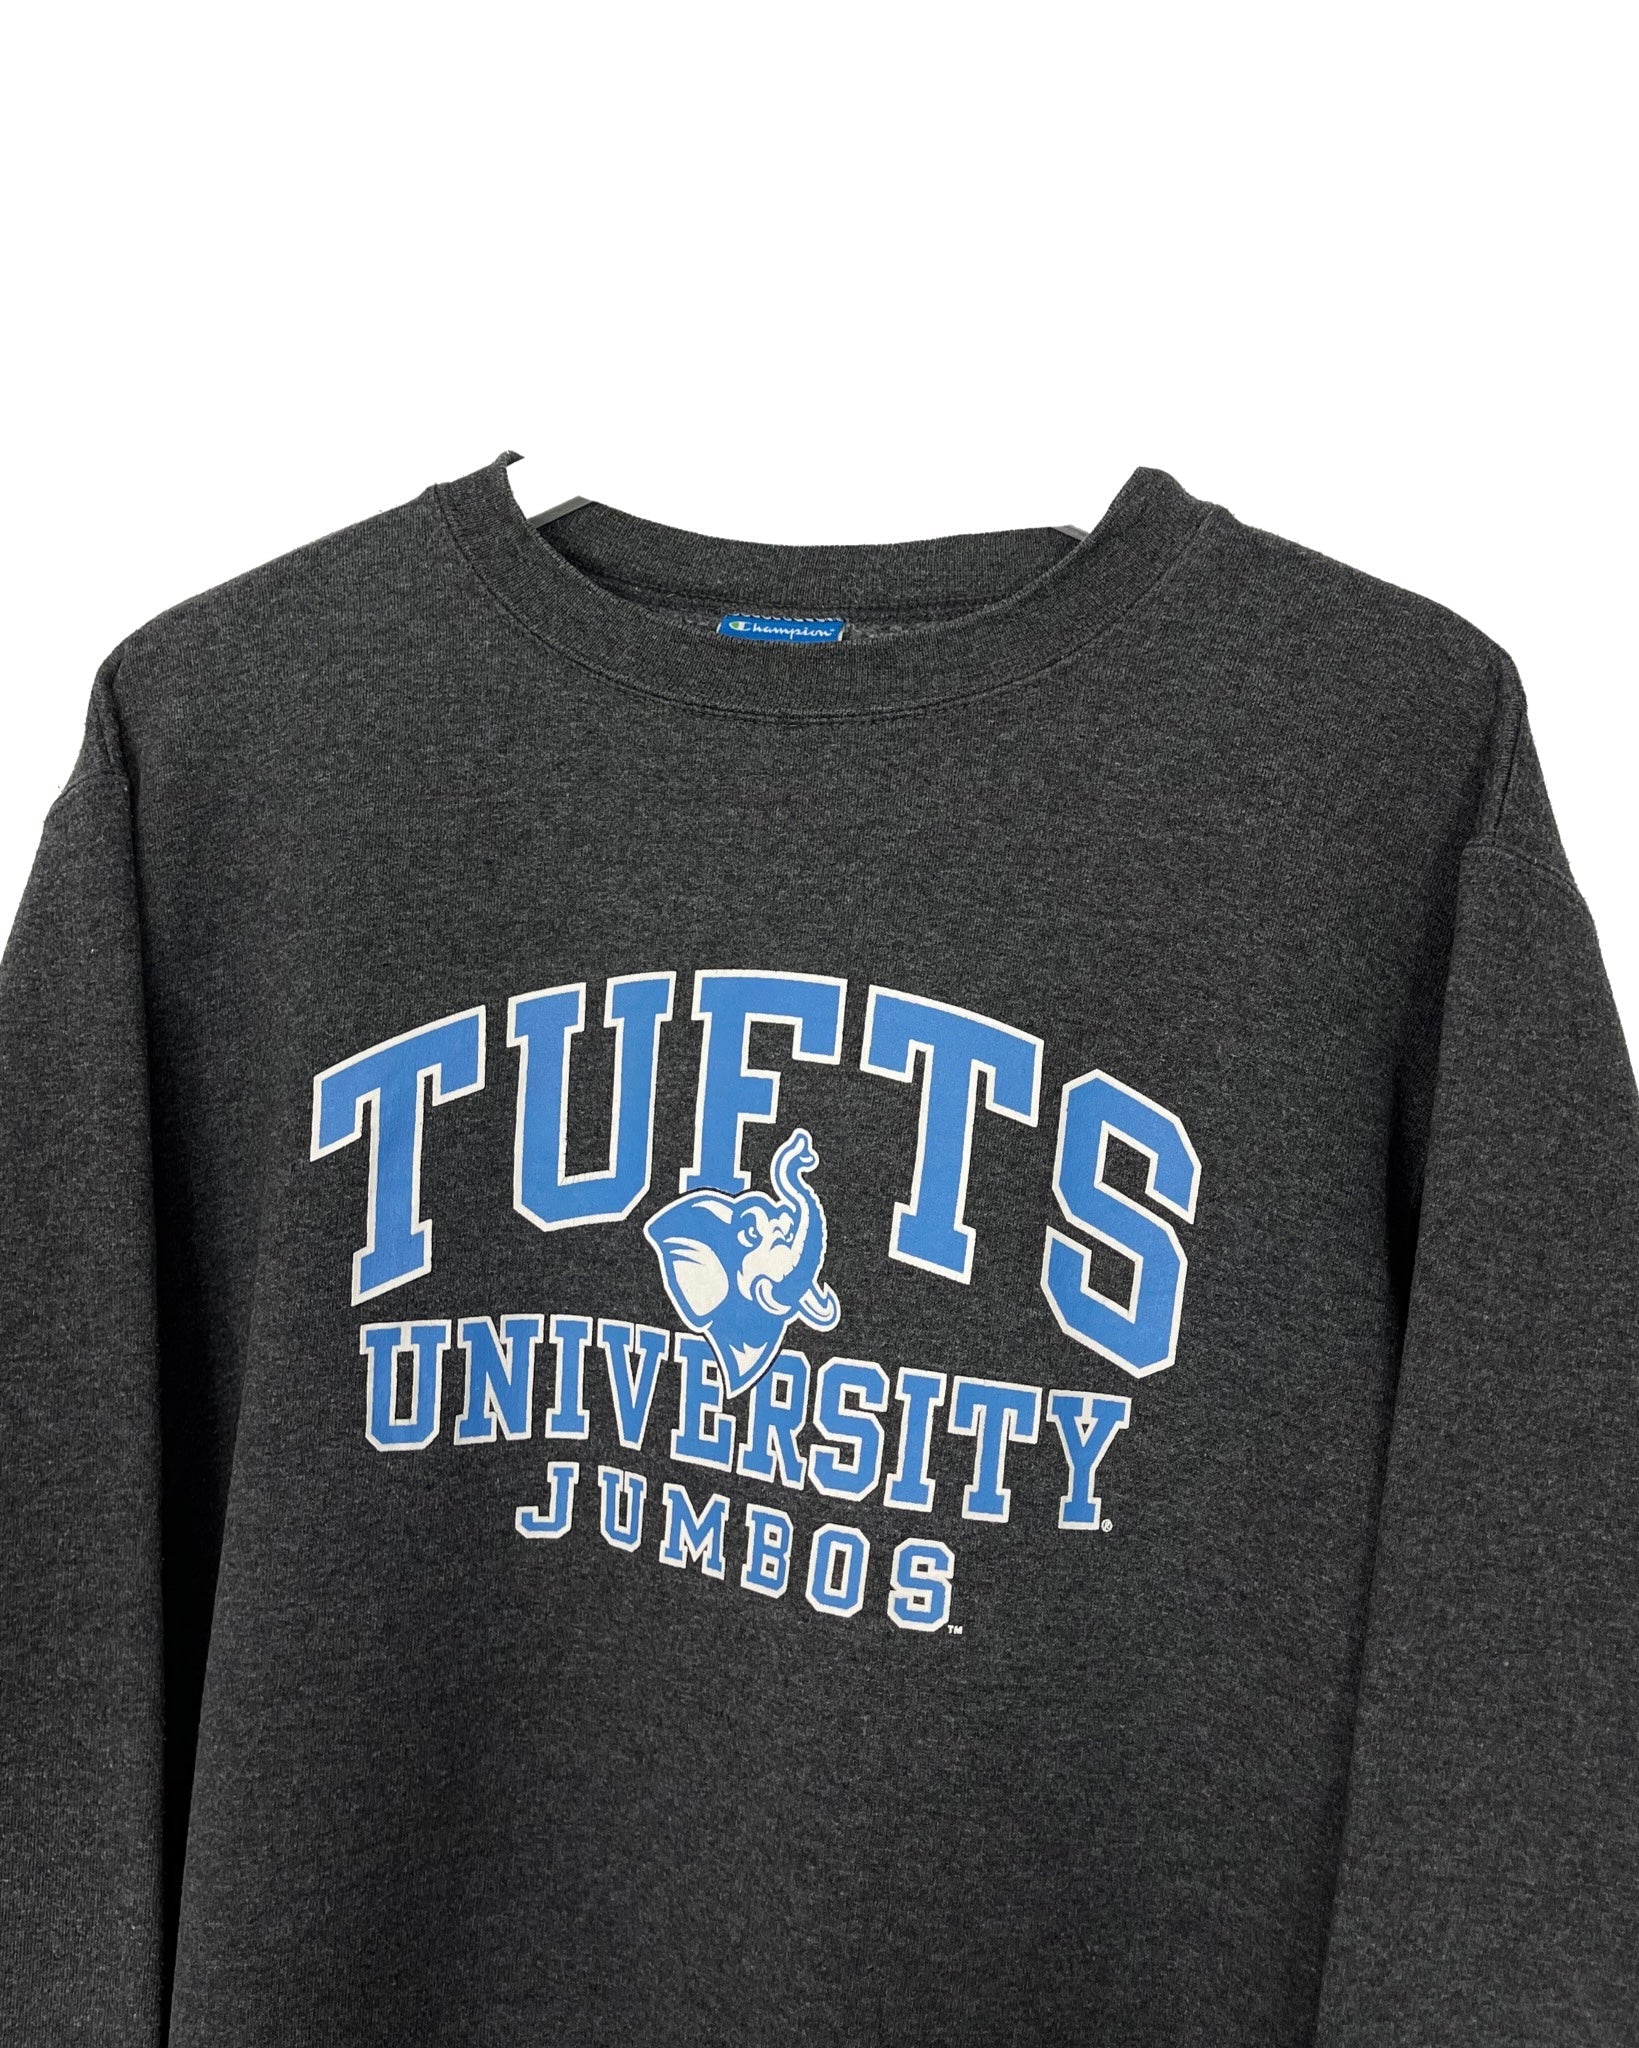  Sweatshirt Champion Sweat - Tufts University - S - PLOMOSTORE